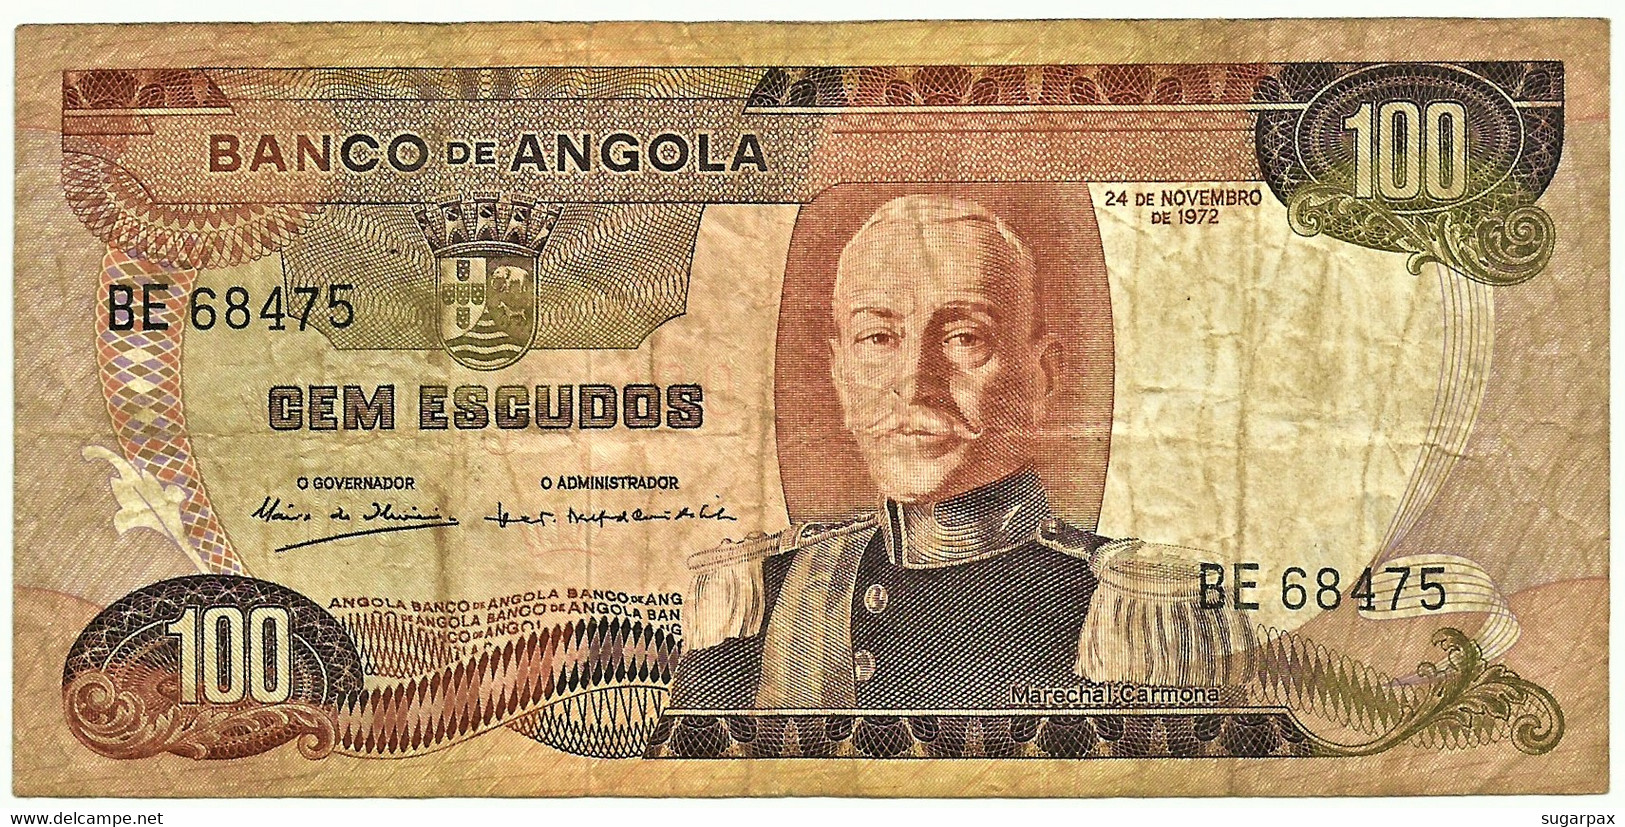 Angola - 100 Escudos - 24.11.1972 - Pick 101 - Série BE - Marechal Carmona - PORTUGAL - Angola